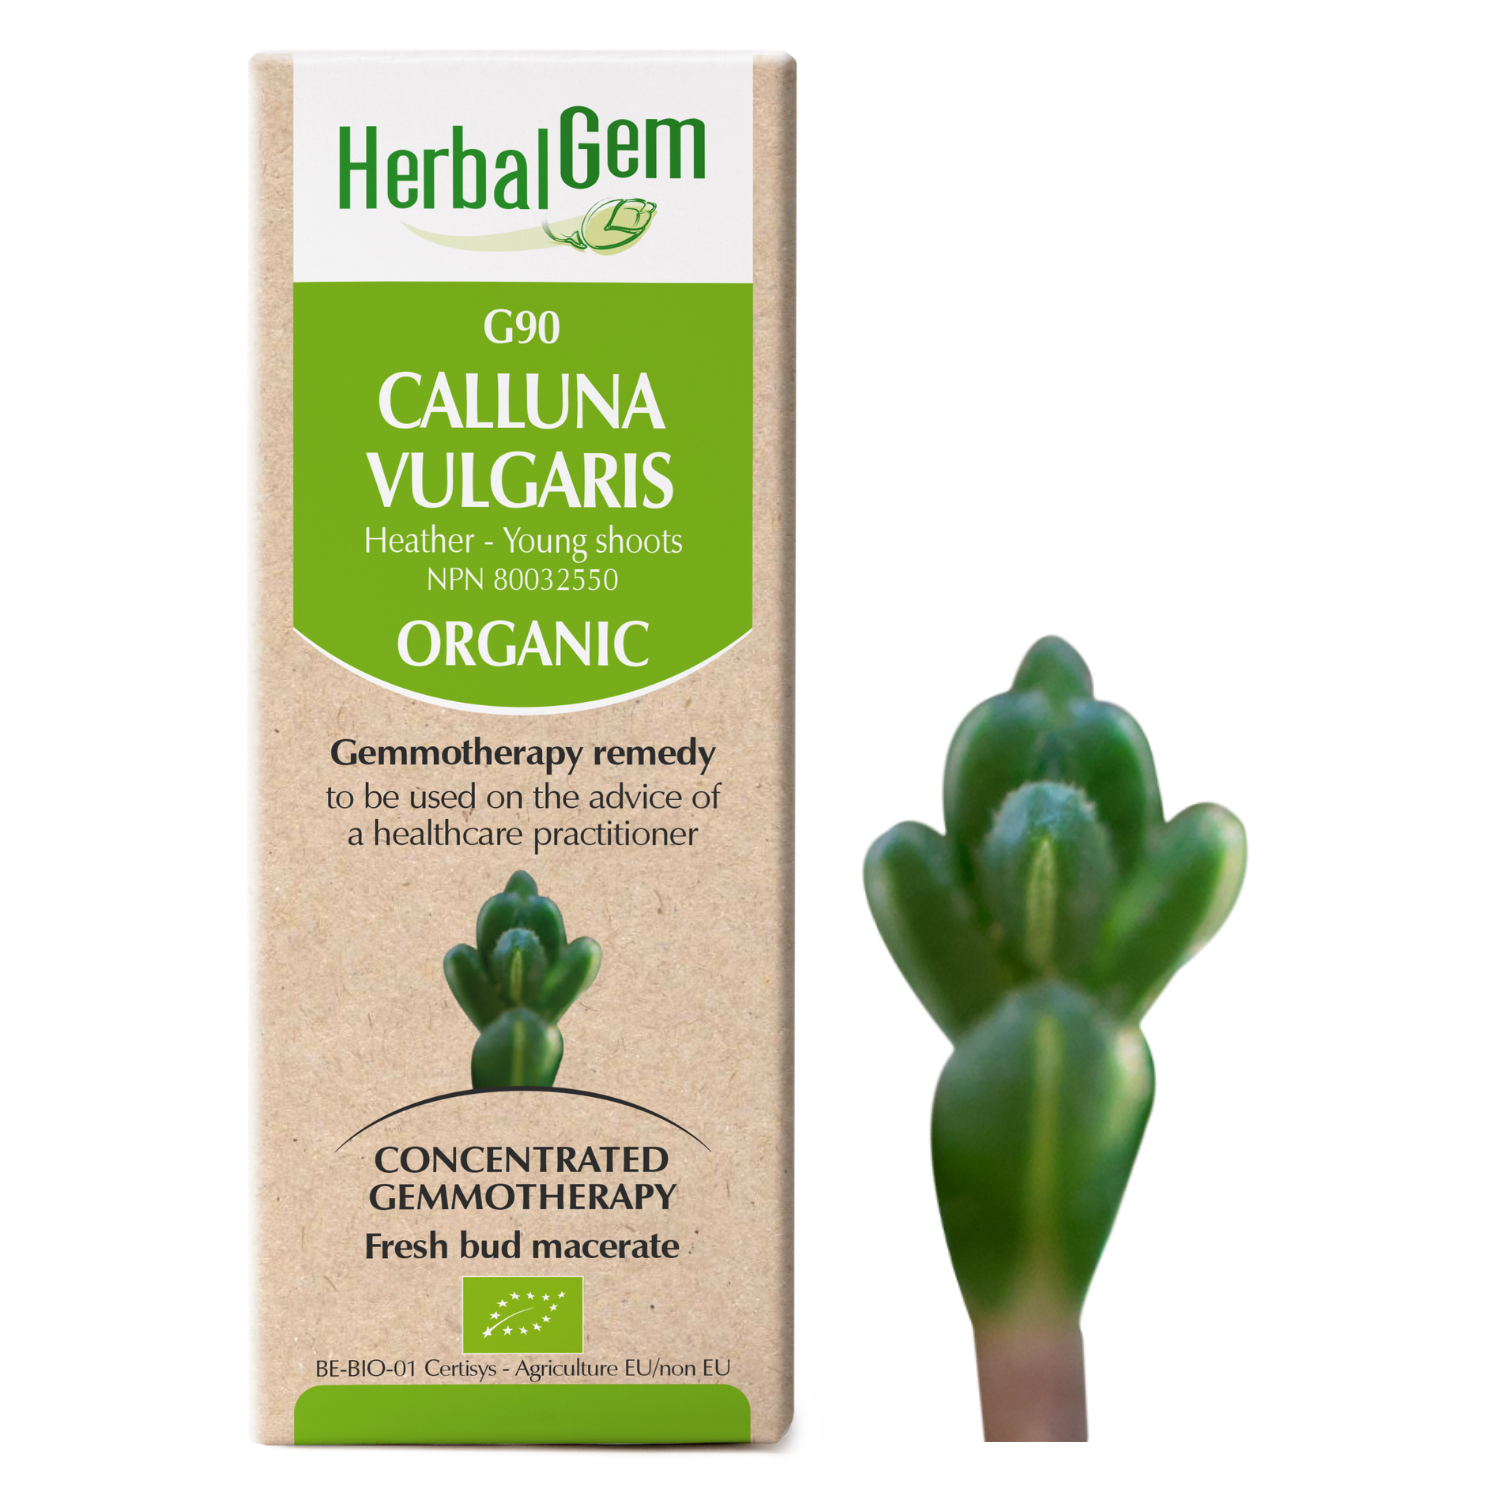 G90 Calluna vulgaris Gemmotherapy, 50ml